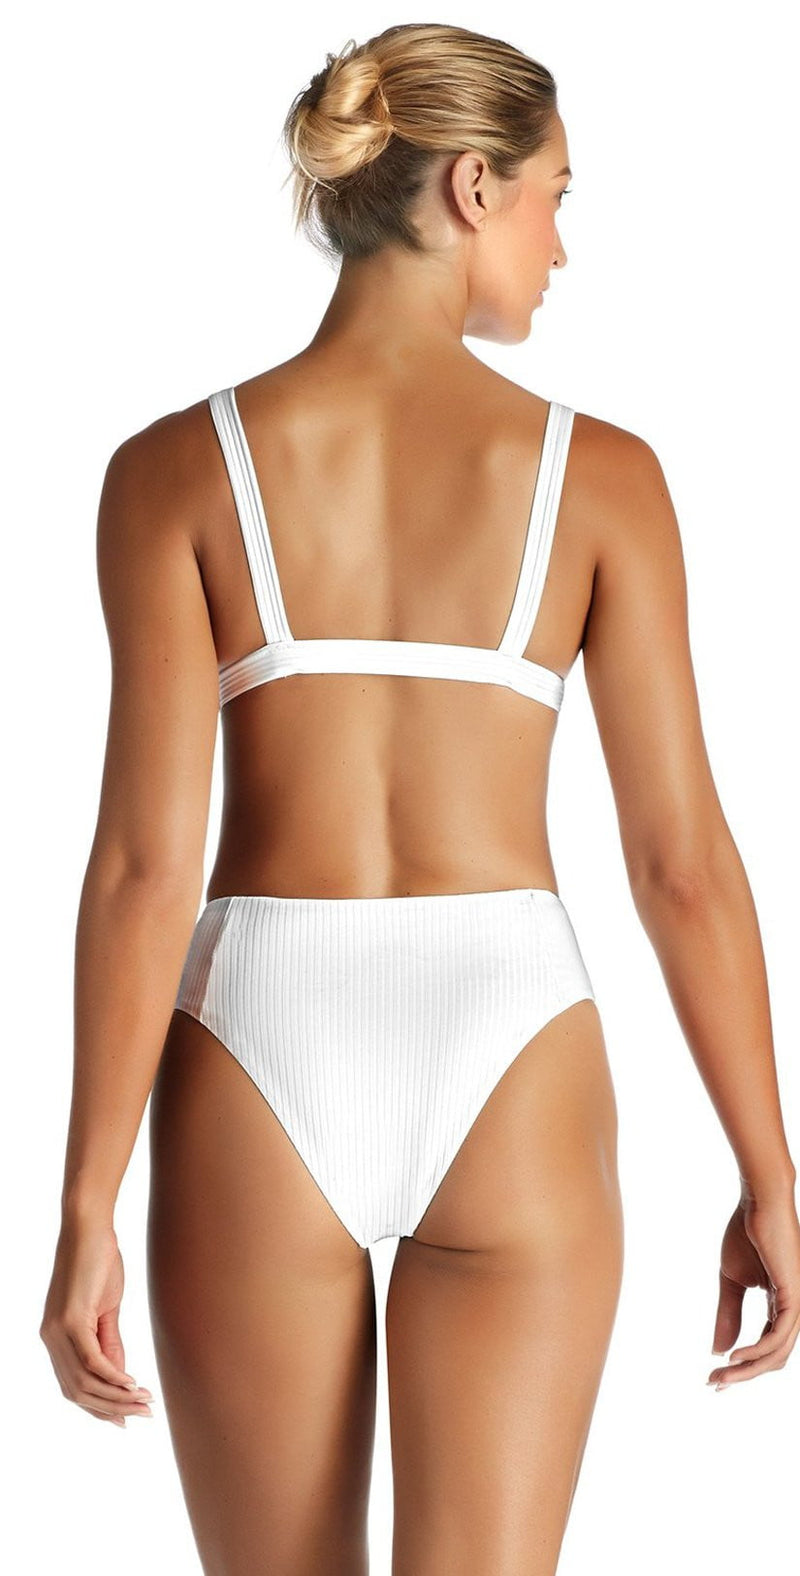 Vitamin A Neutra EcoRib Triangle Bikini Top in White 805T ERW: